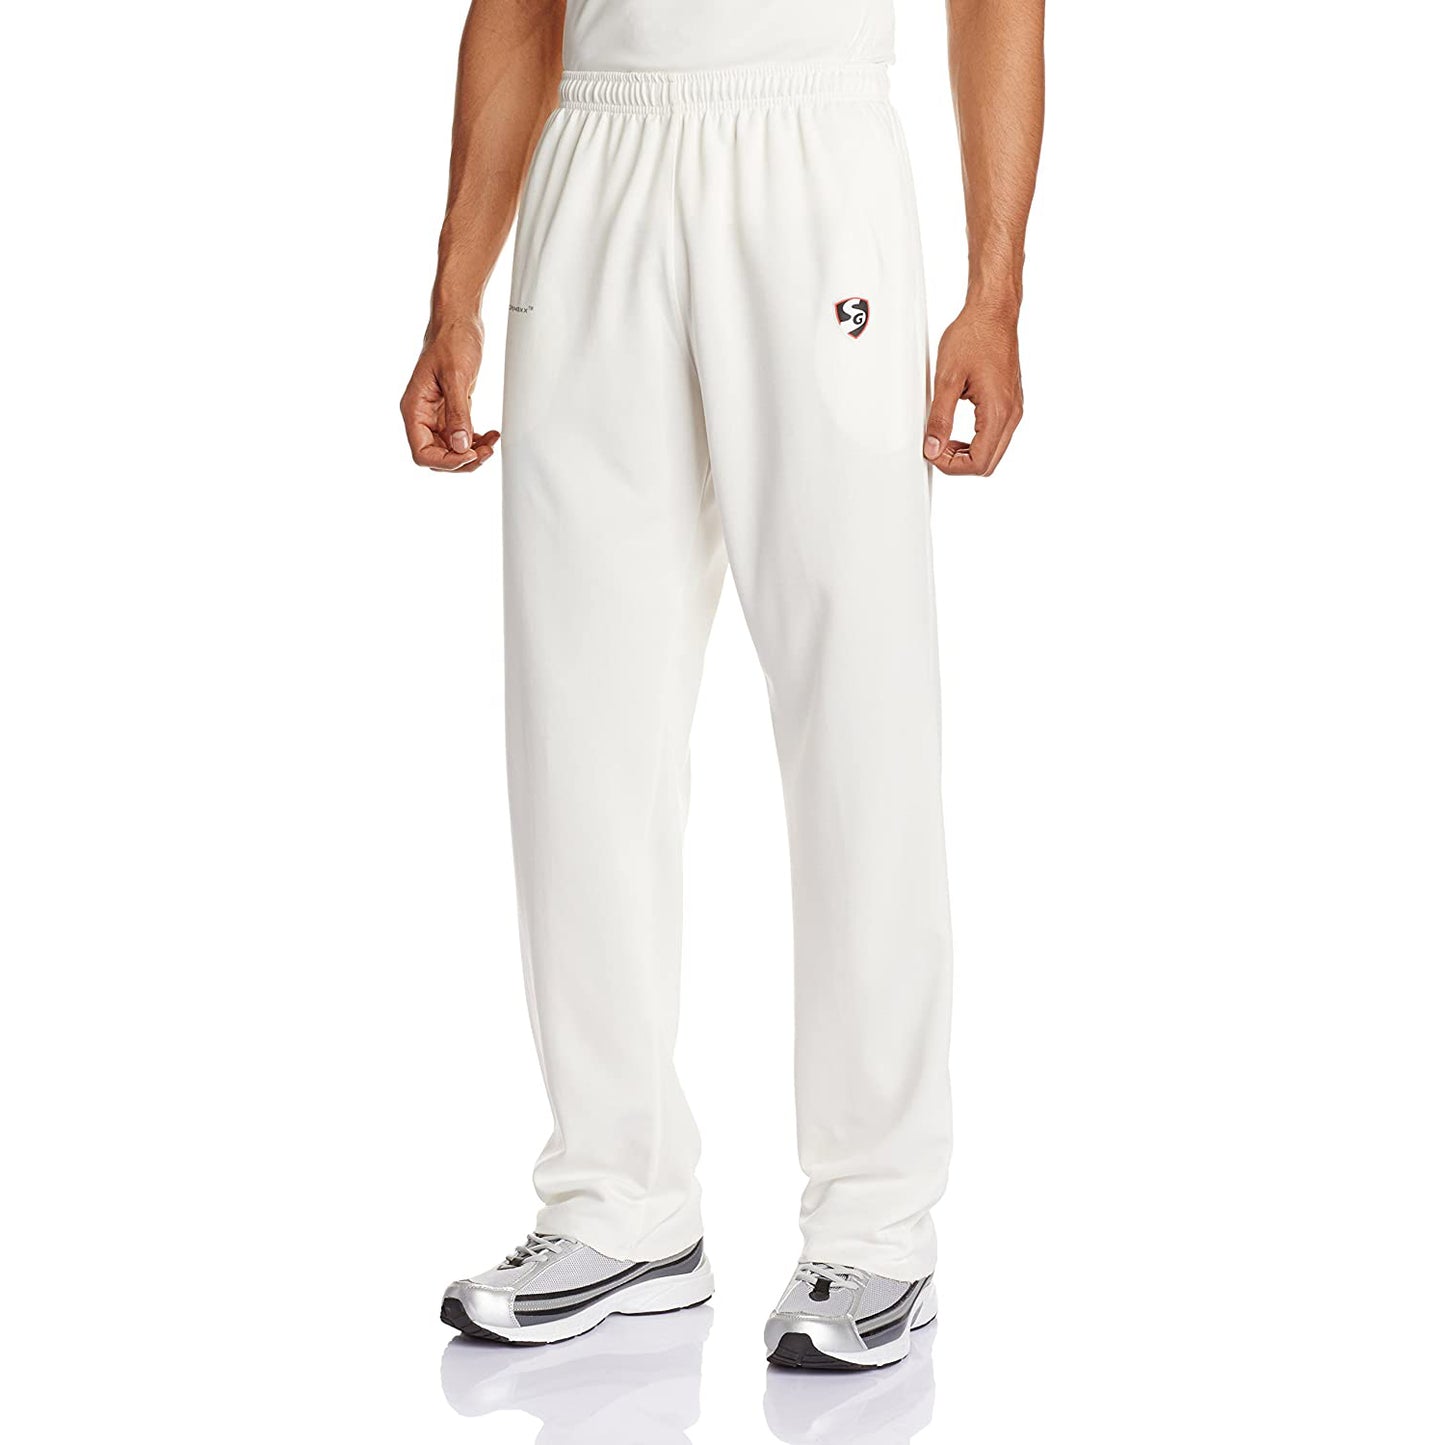 SG Club Cricket Trouser (White) - Best Price online Prokicksports.com